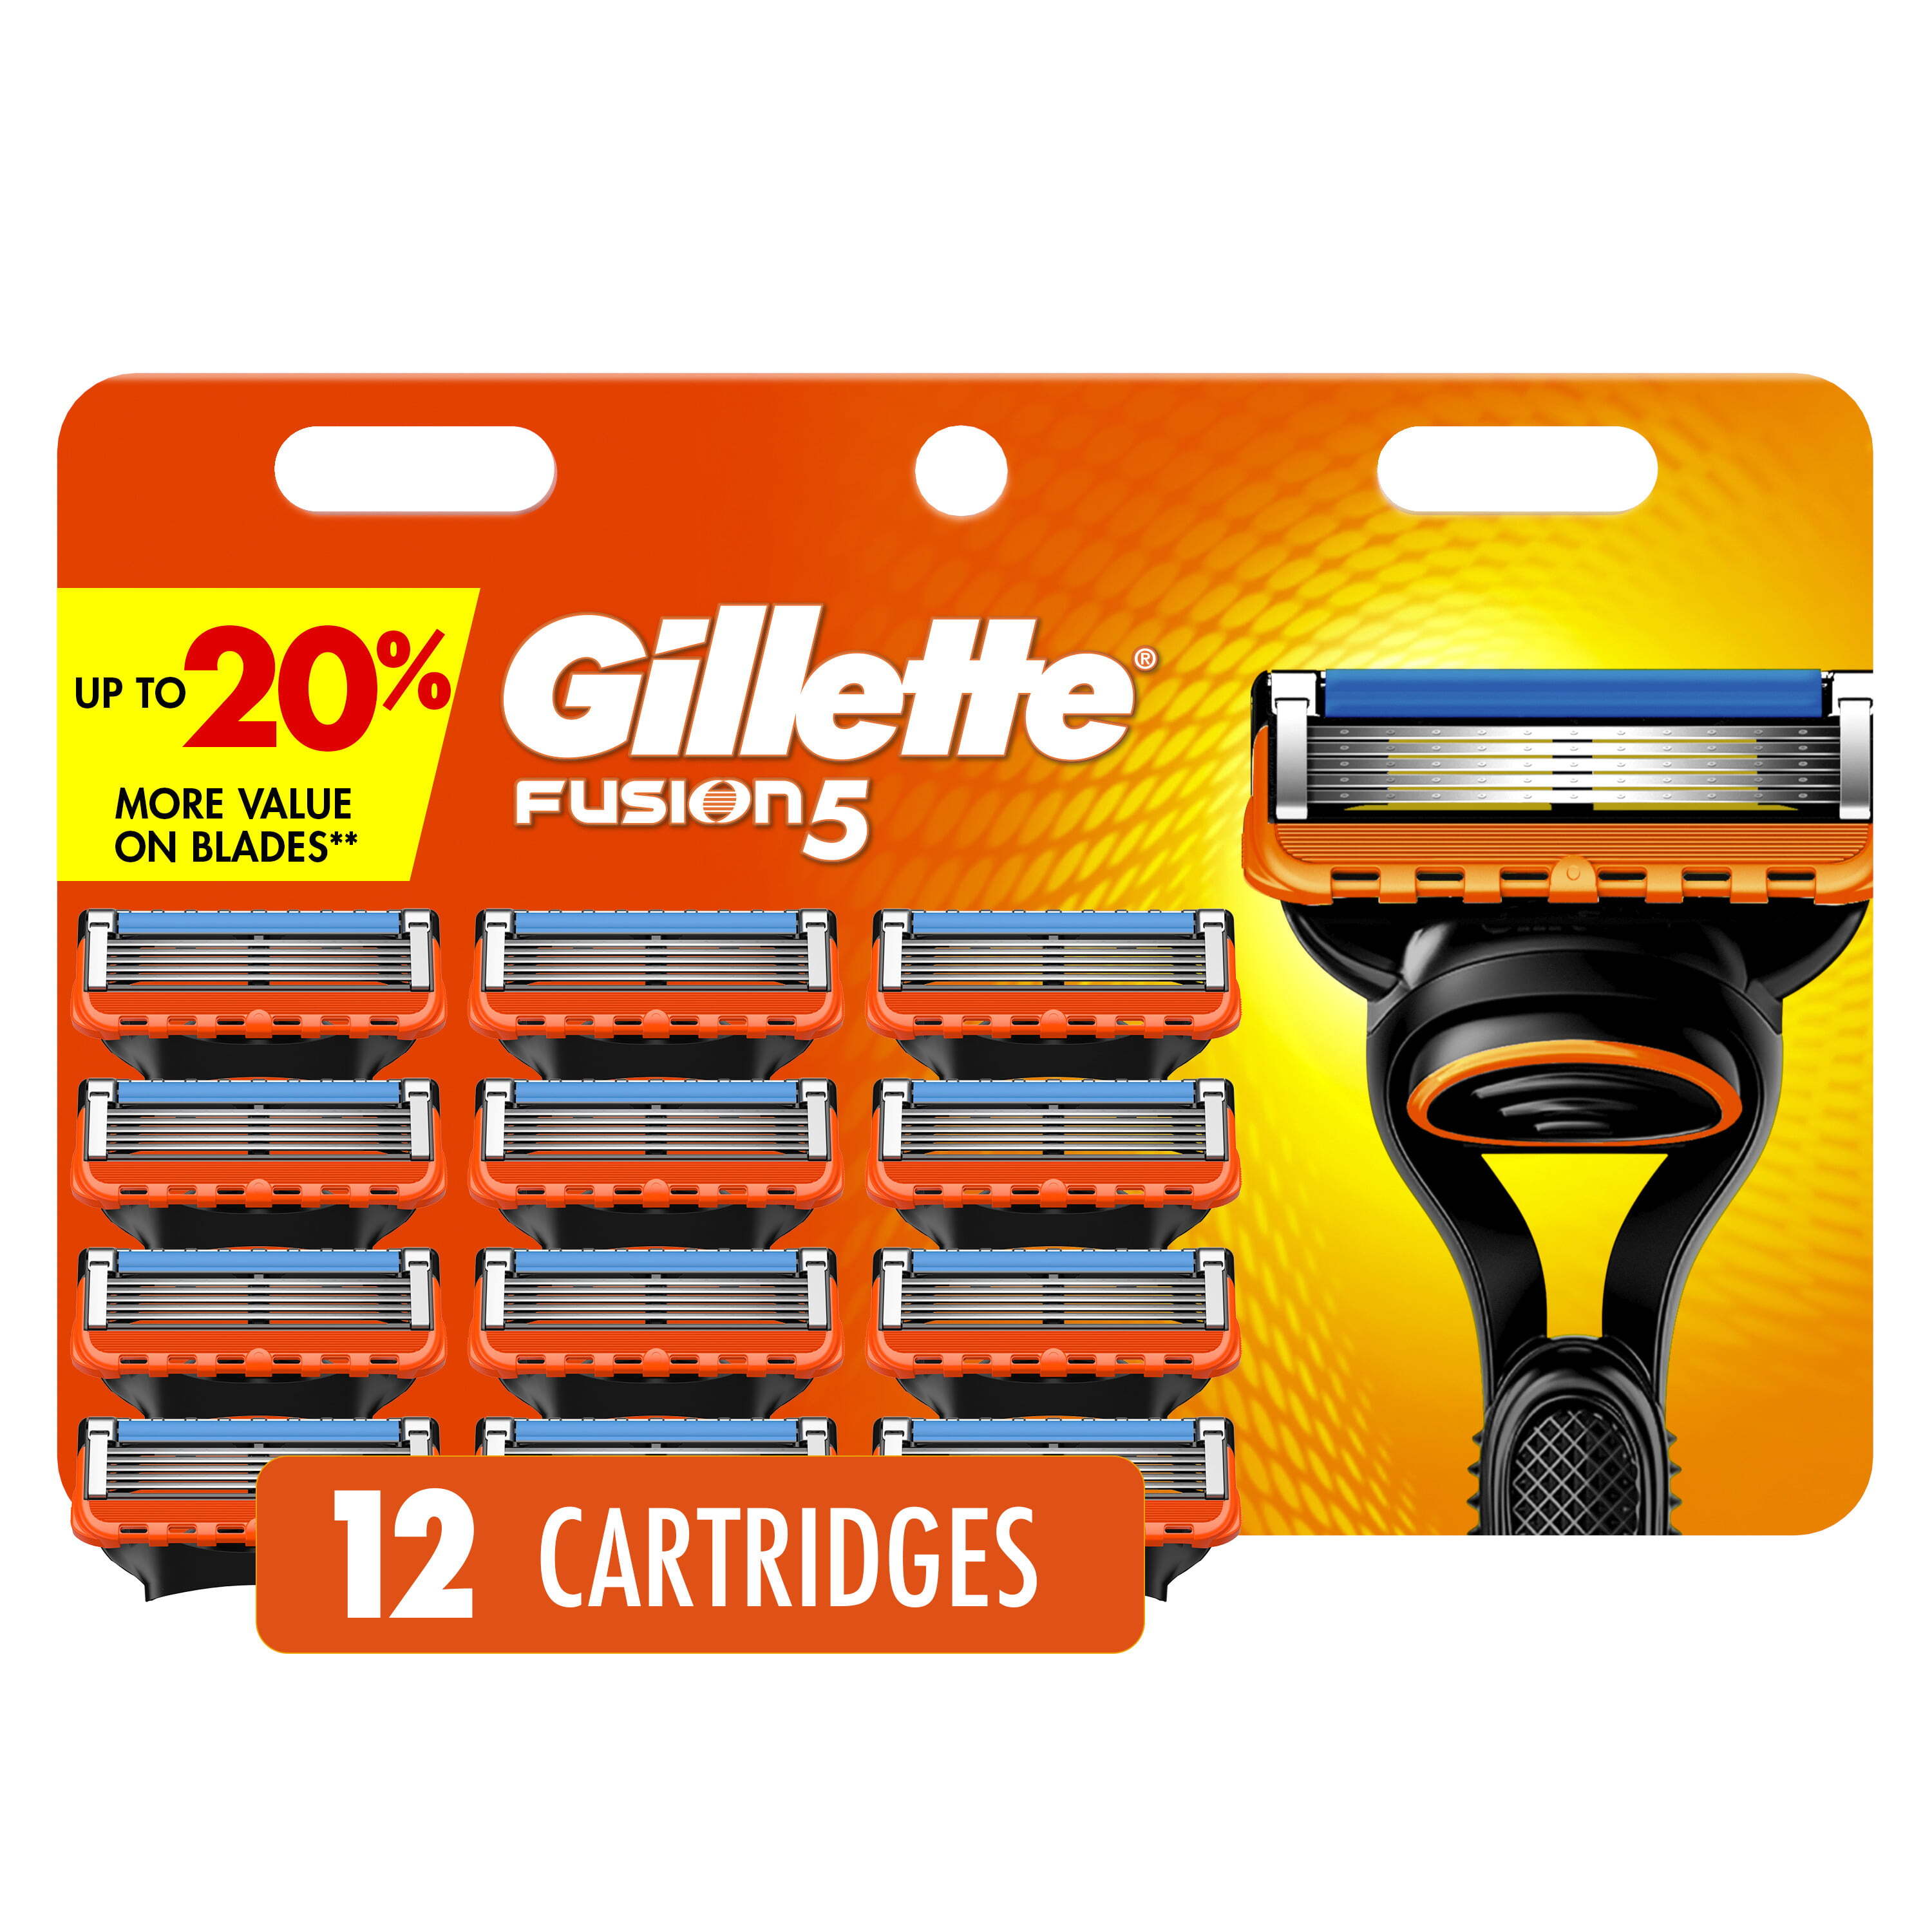 Gillette Fusion5 Men's Razor Blade Refills, 12 Count - image 1 of 12